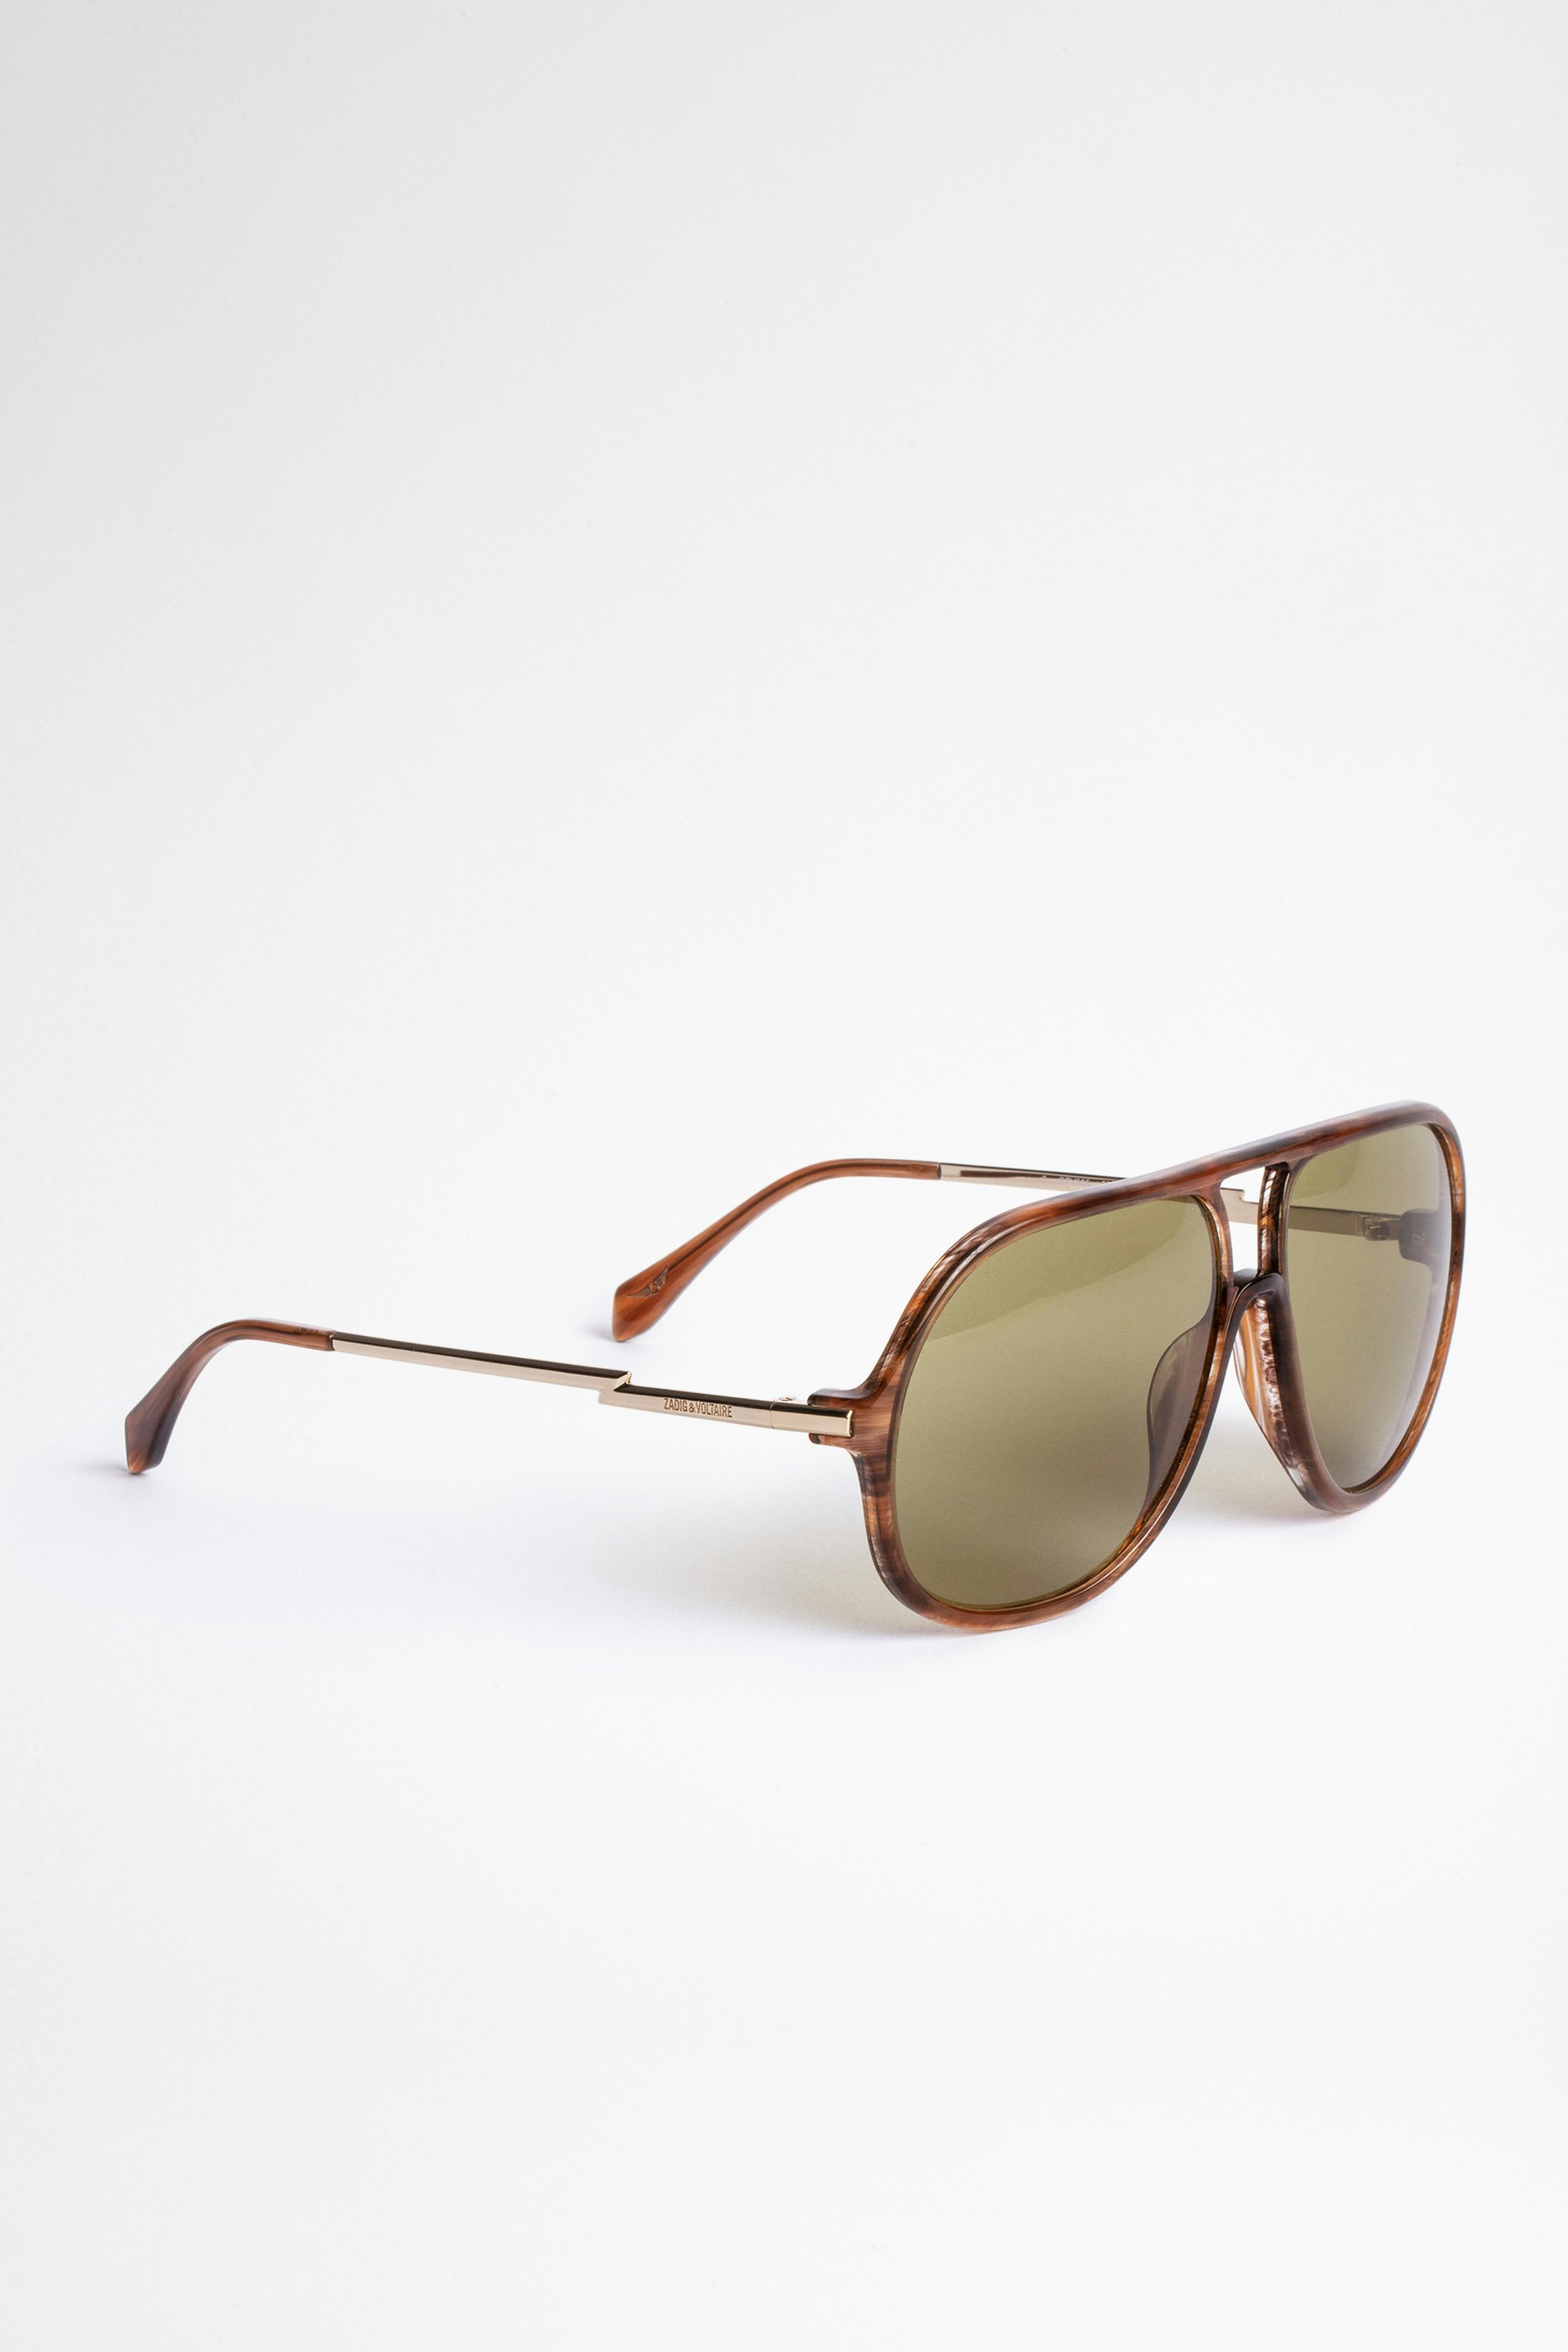 Flash Vintage Sunglasses Unisex bio-acetate sunglasses in brown with green lenses